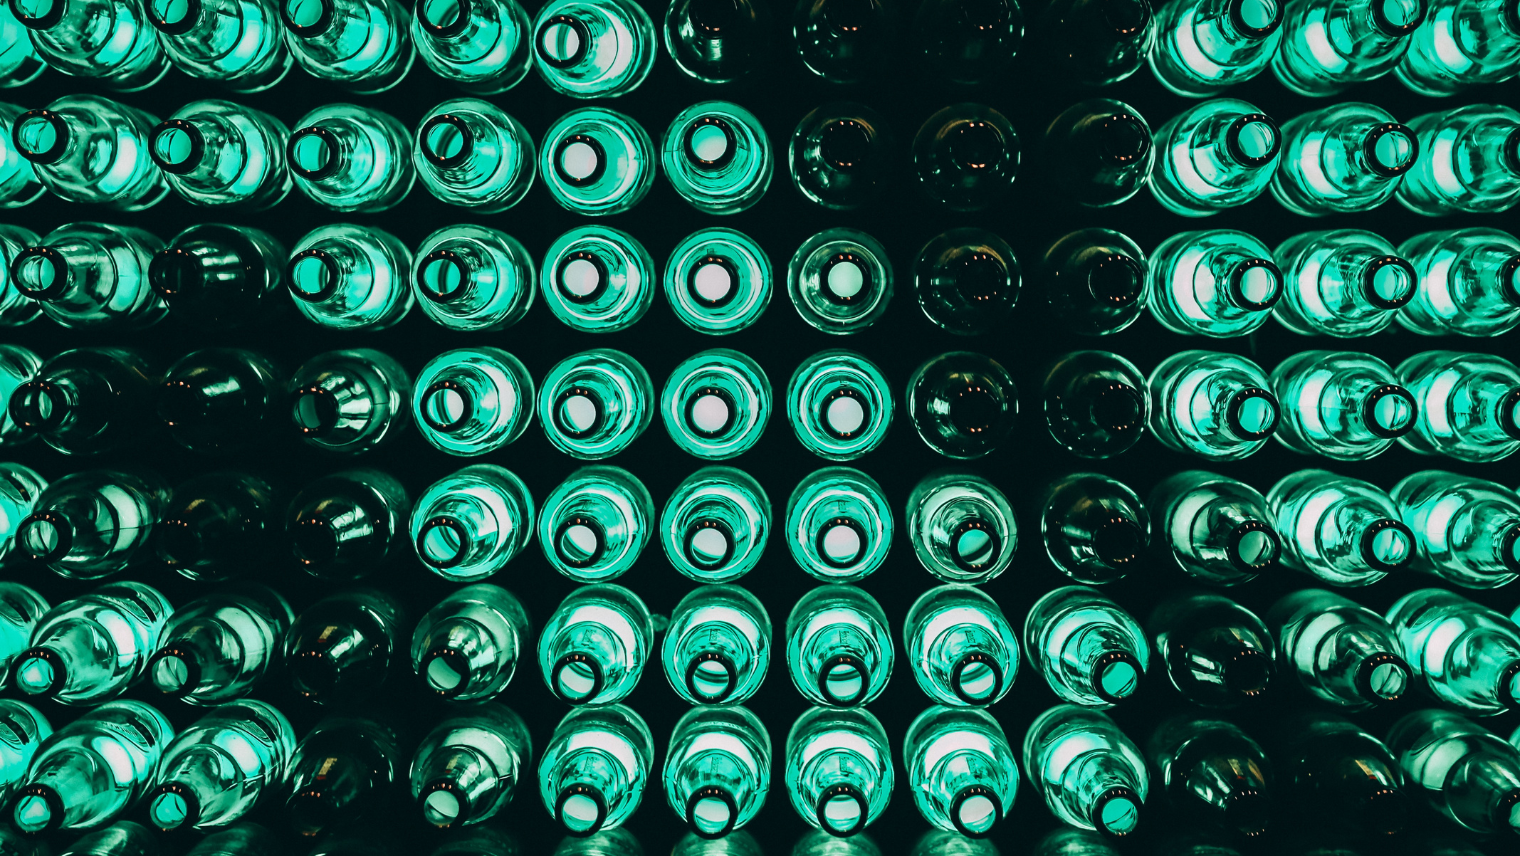 Green lit up bottles